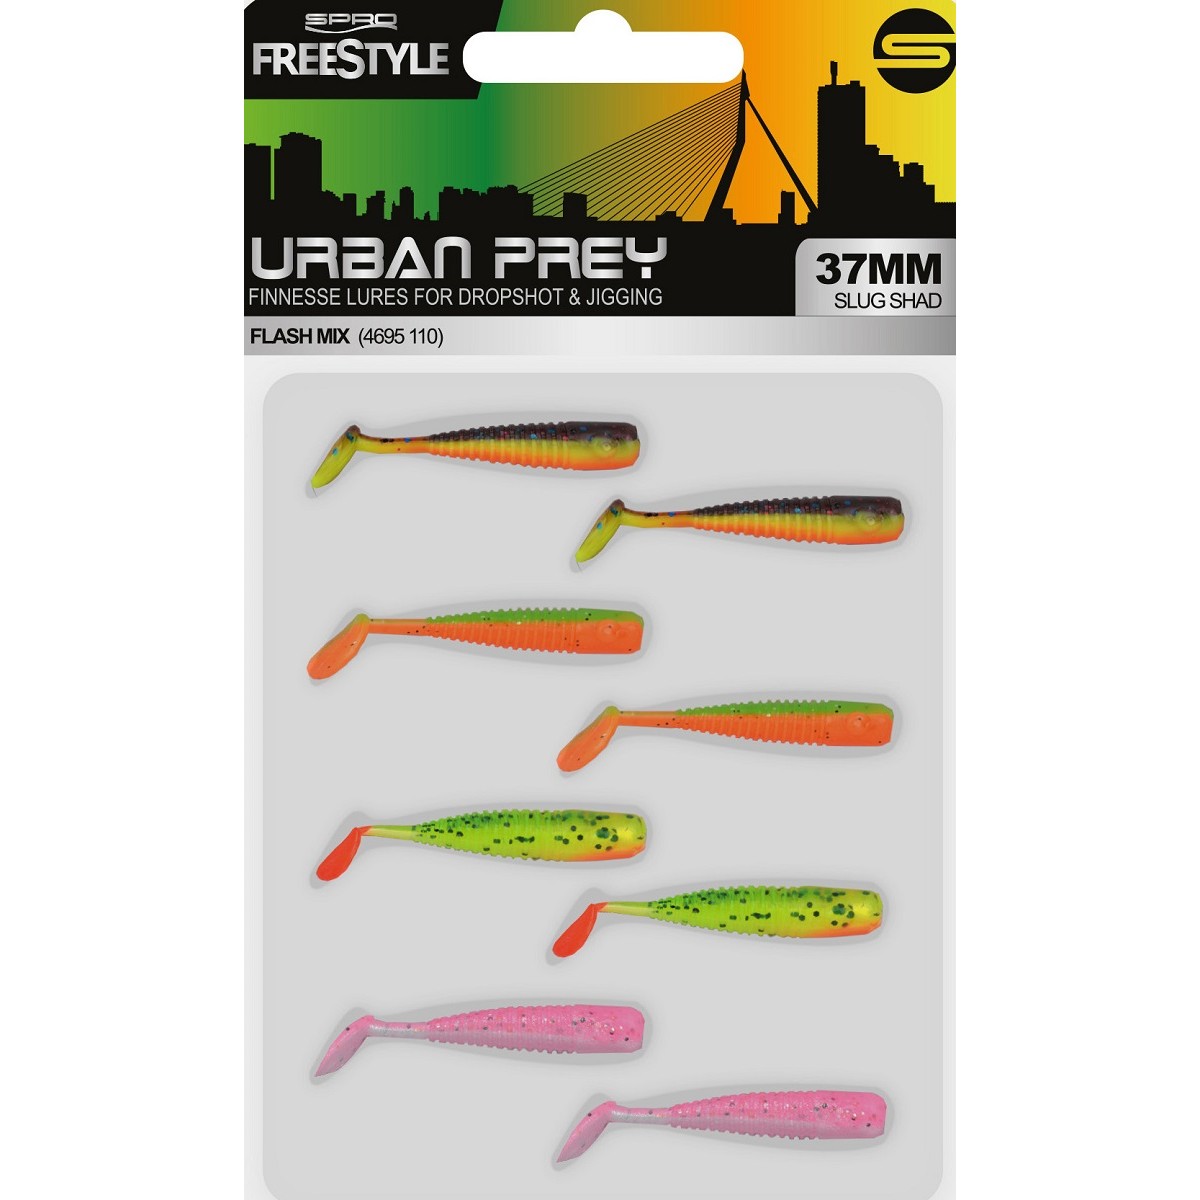 Комплект SPRO Freestyle Urban Prey Micro Slug 37mm Flash Mix